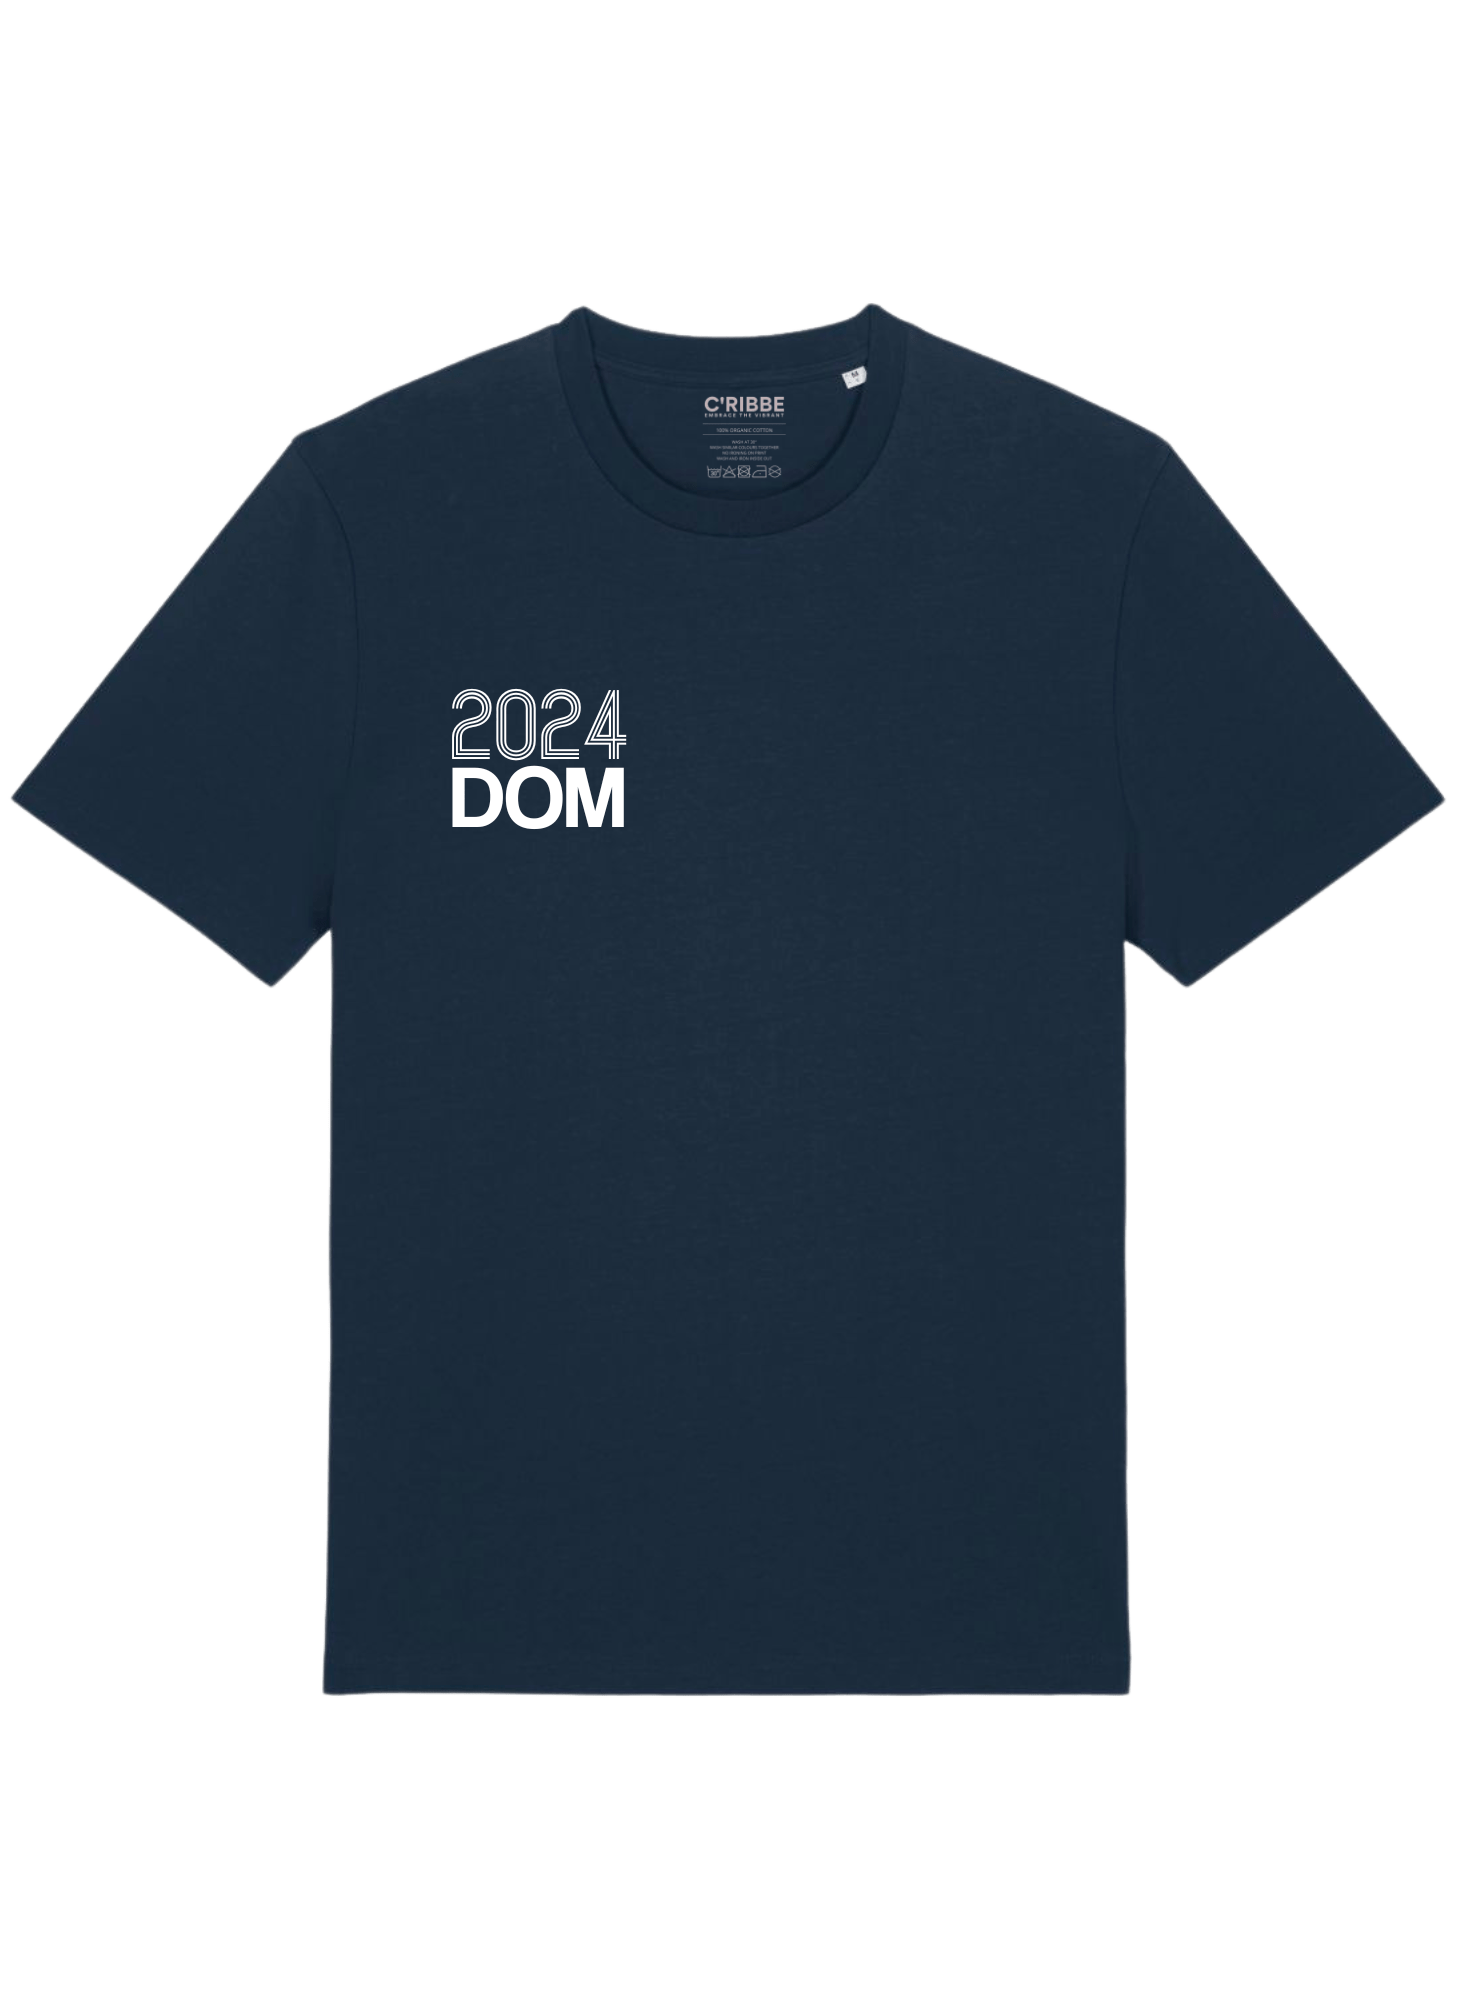 DOMINICAN REPUBLIC ATHLETICS DEPT. 2024 Unisex Crew Neck T-Shirt, French Navy